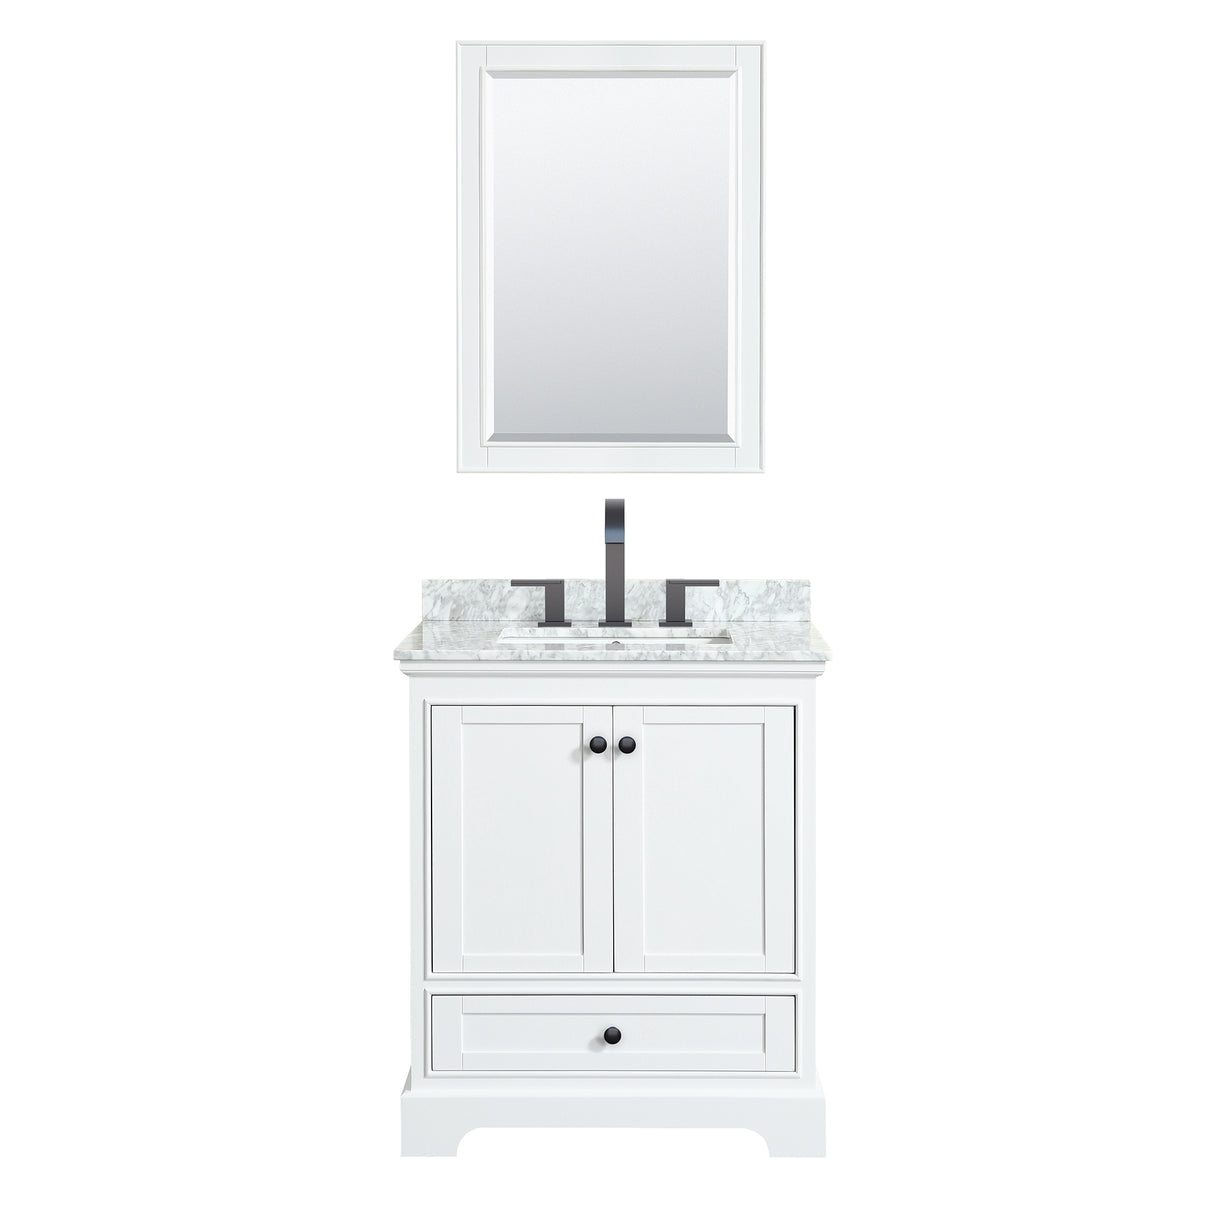 Deborah 30 Inch Single Bathroom Vanity in White White Carrara Marble Countertop Undermount Square Sink Matte Black Trim Medicine Cabinet